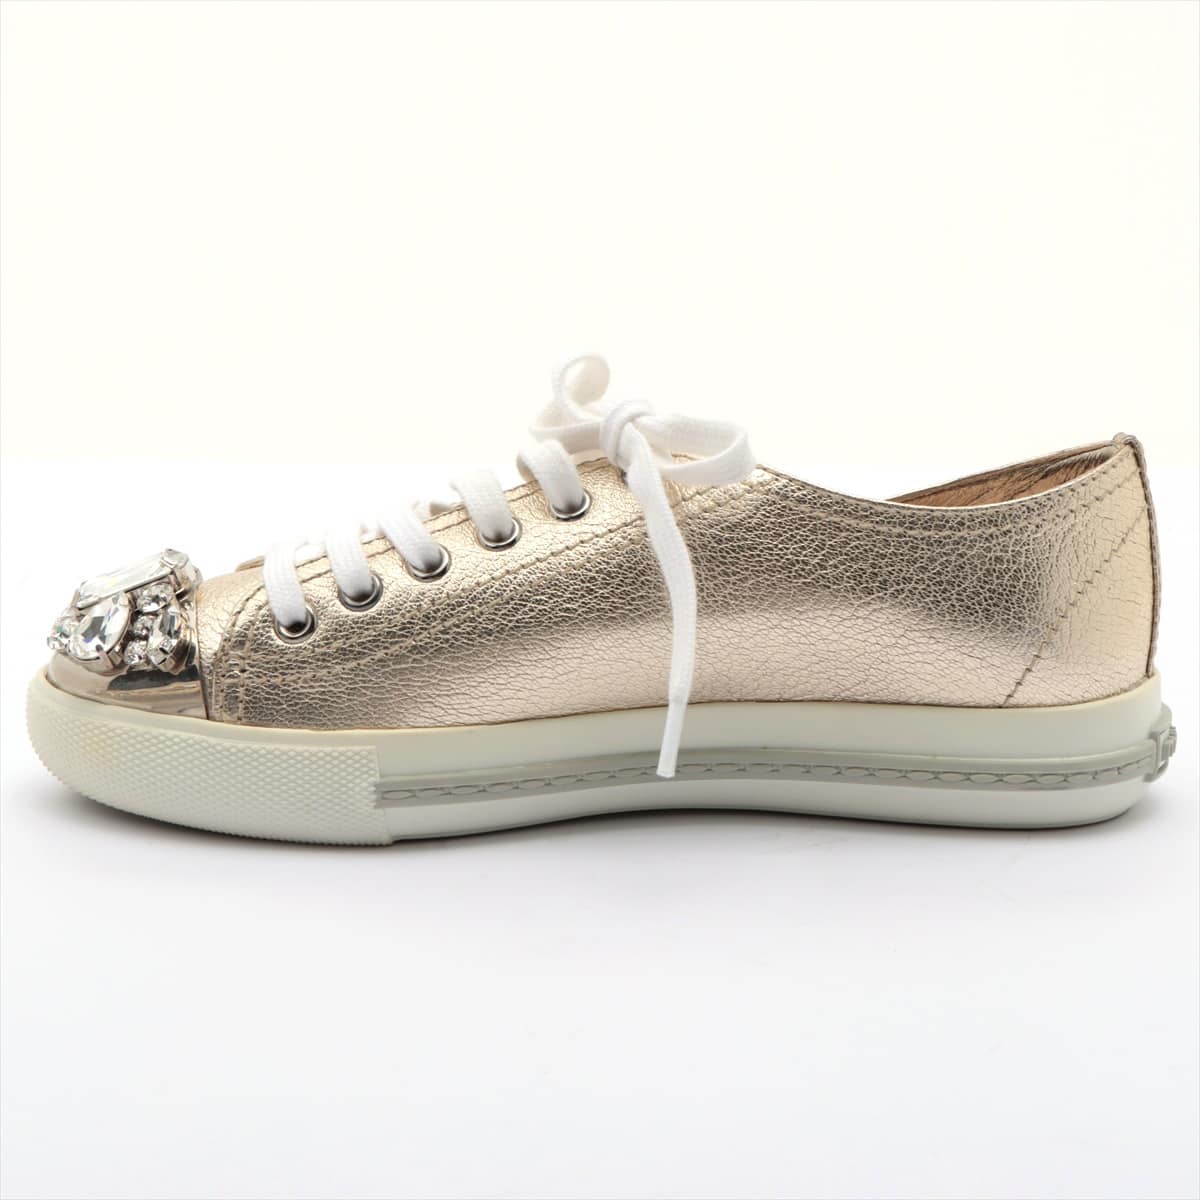 Miu Miu Leather Sneakers 351/2 Ladies' Gold Bijou 5E8557